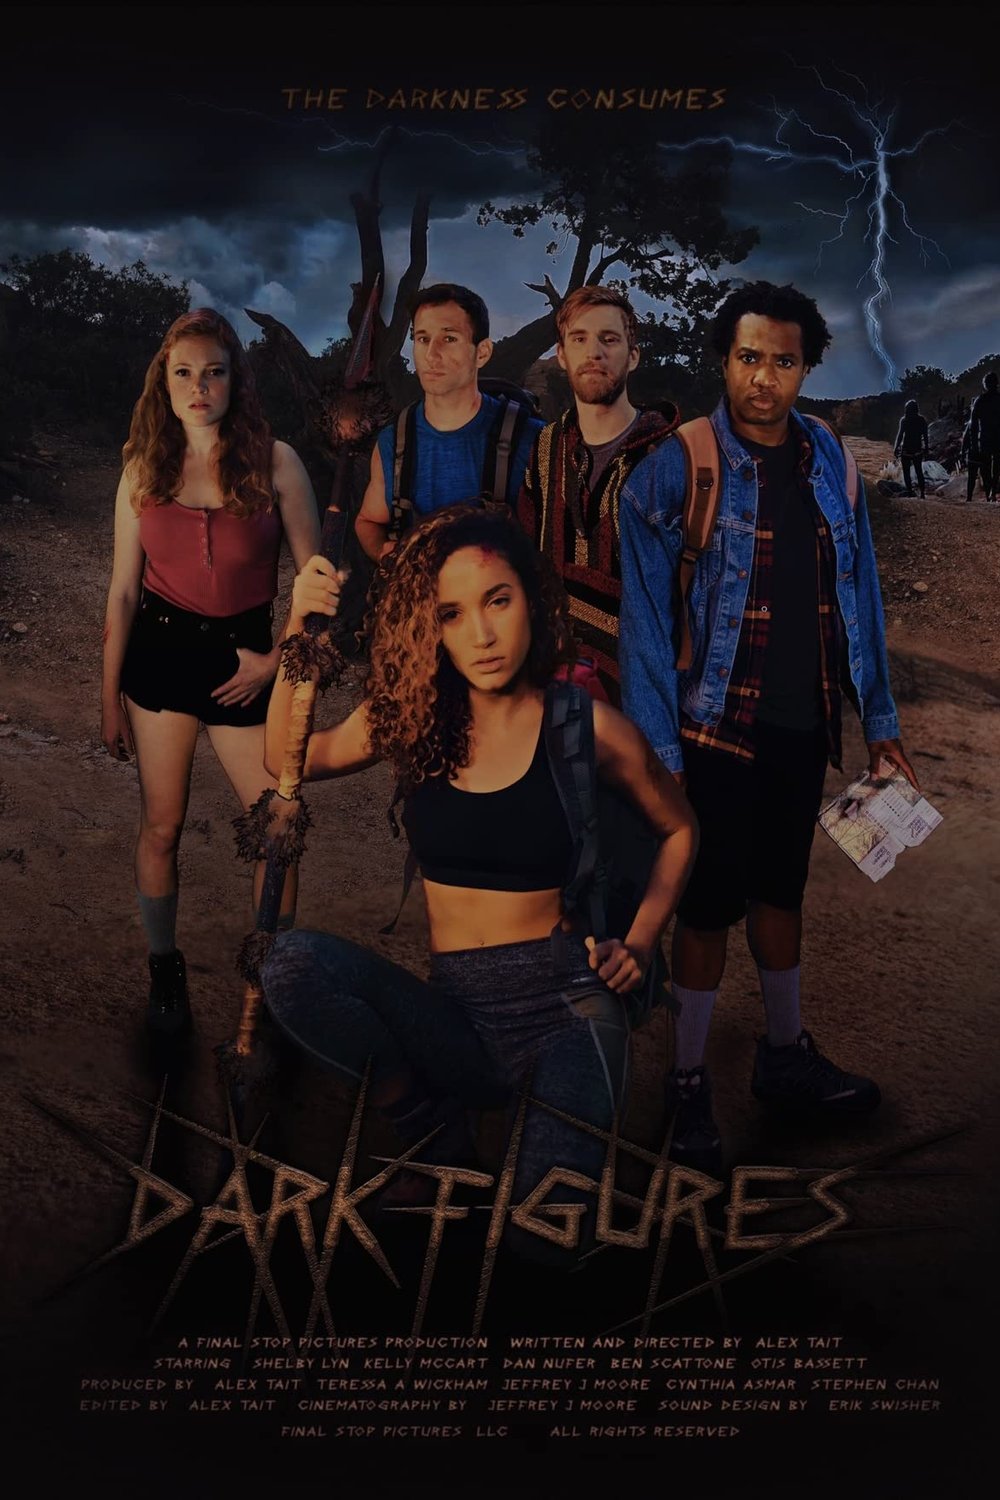 Poster of the movie Dark Figures